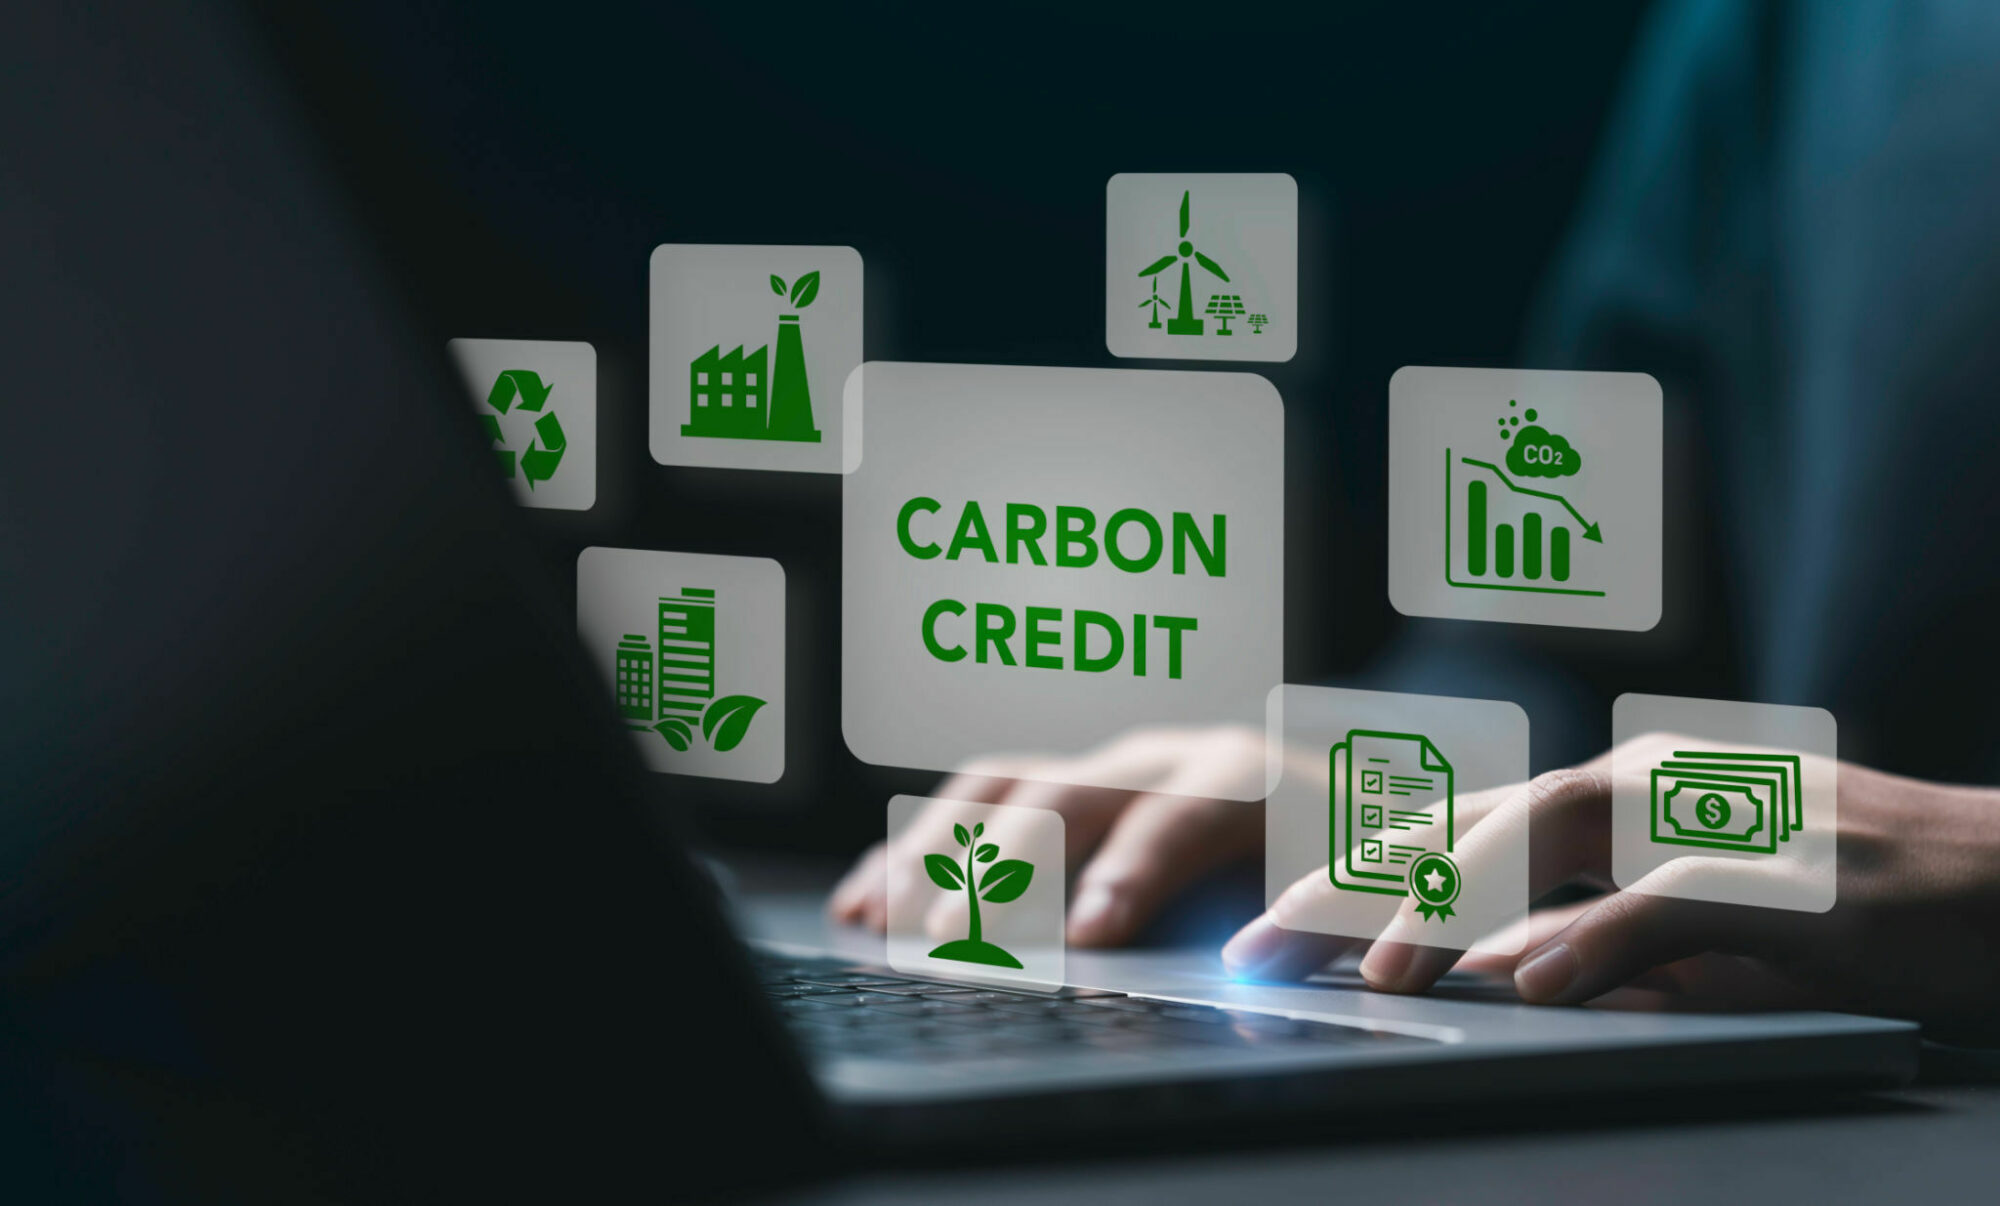 kredit karbon